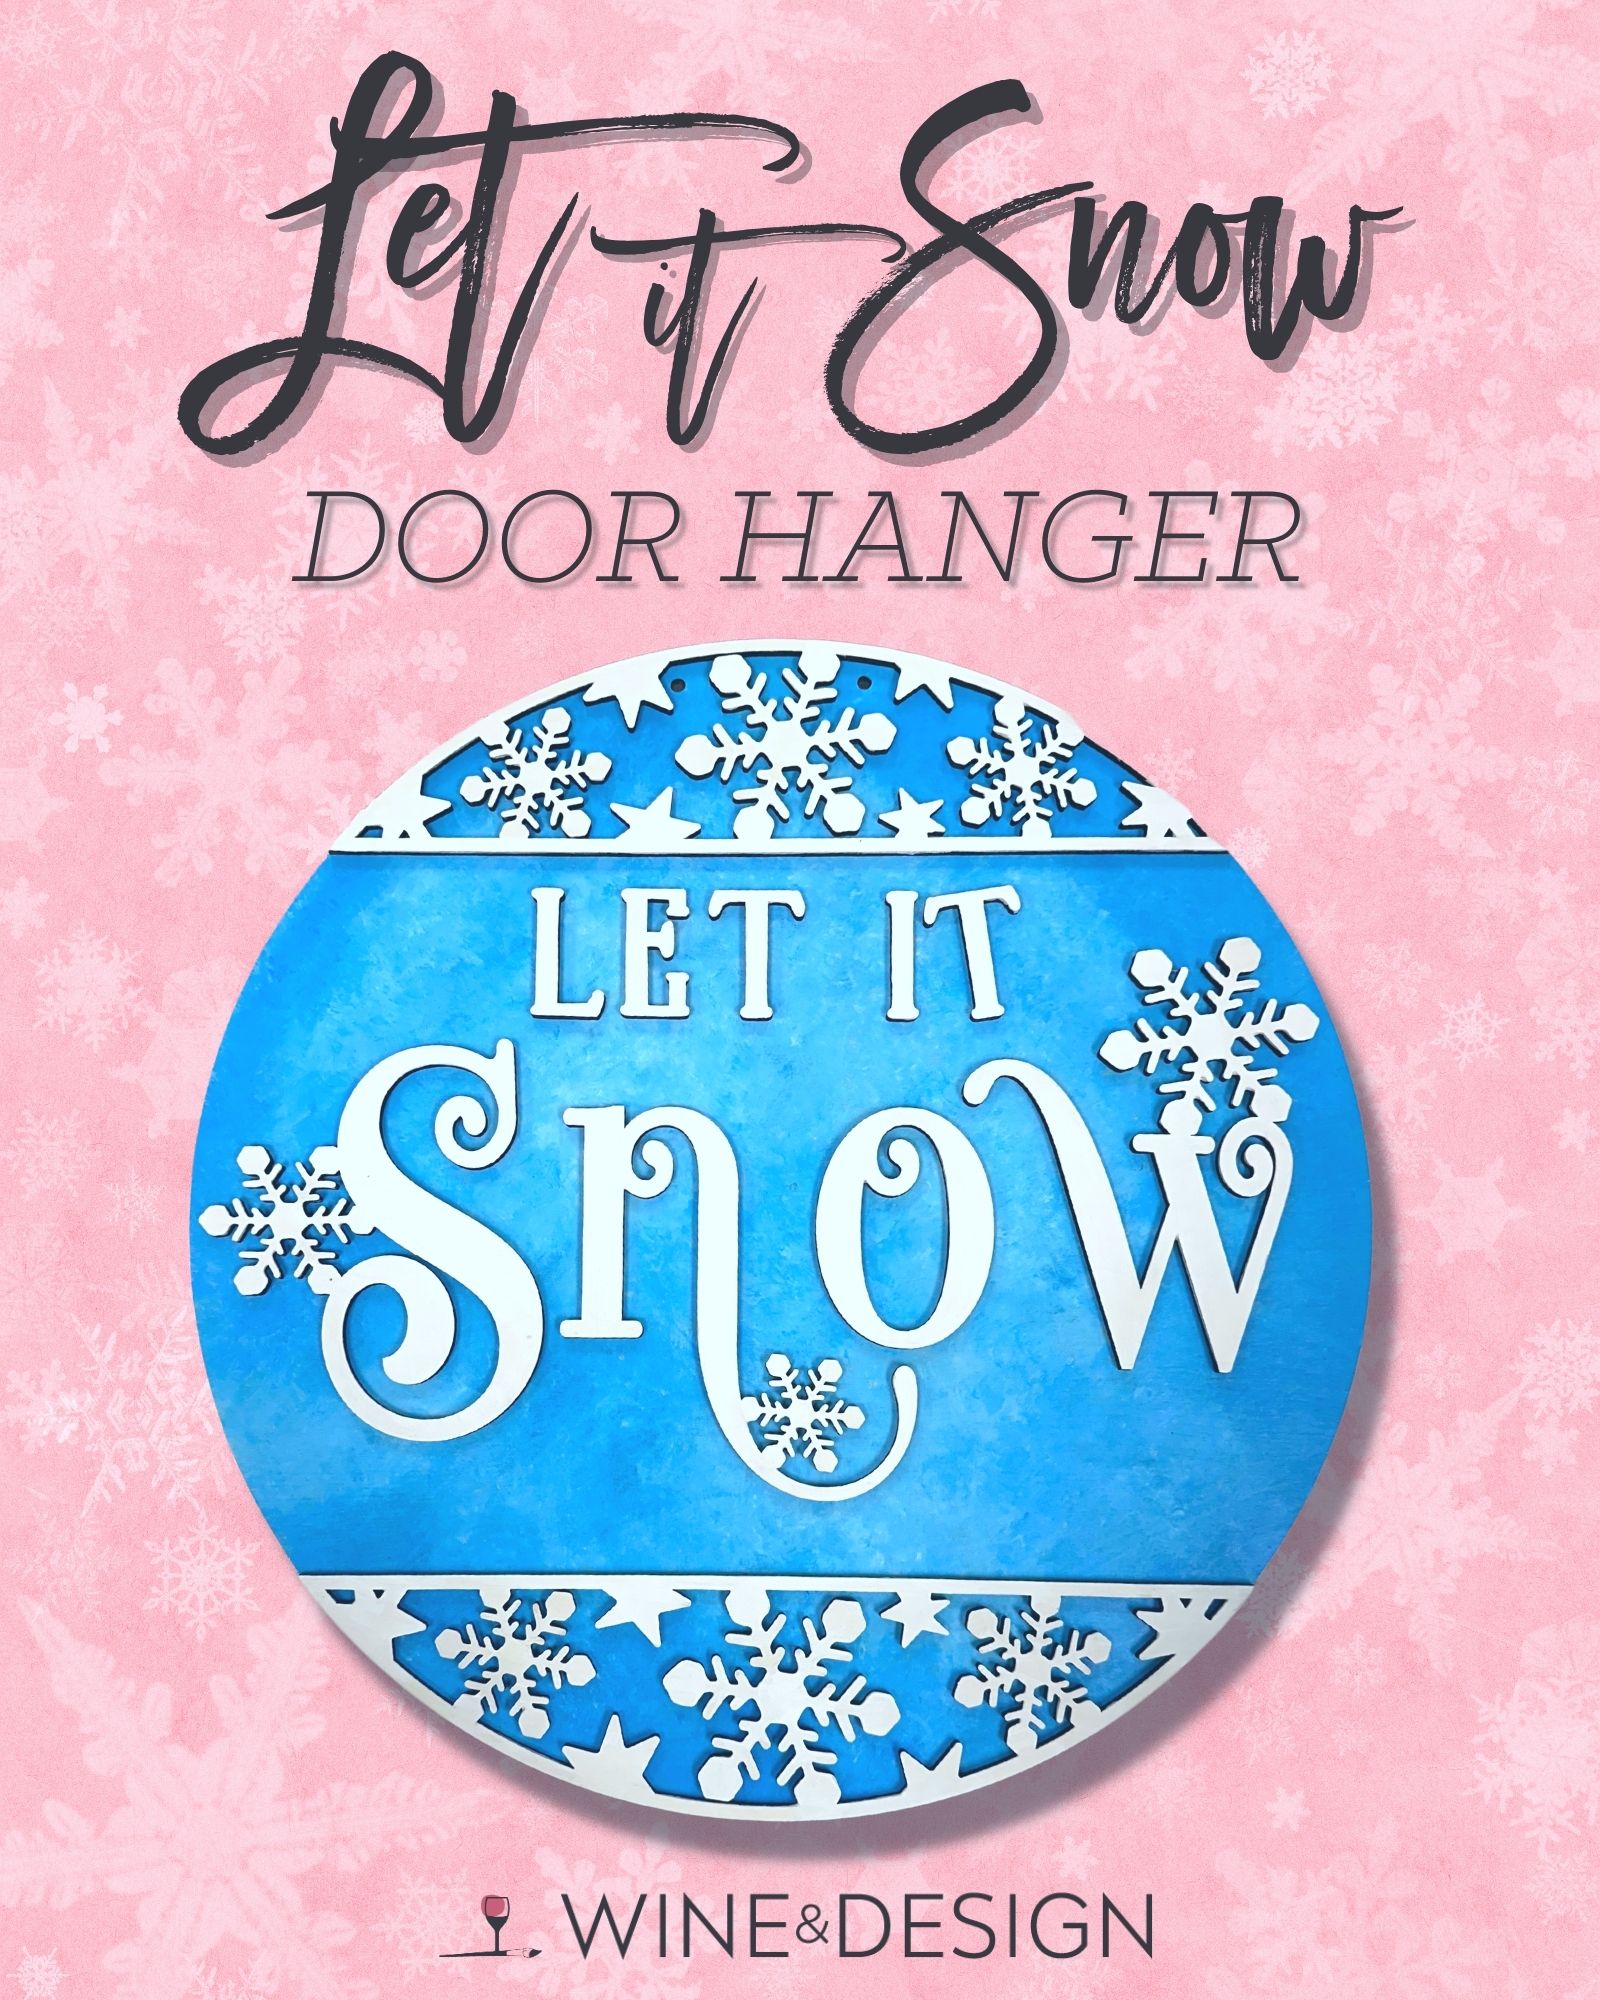 Let it Snow Door Hanger Take Home Kit